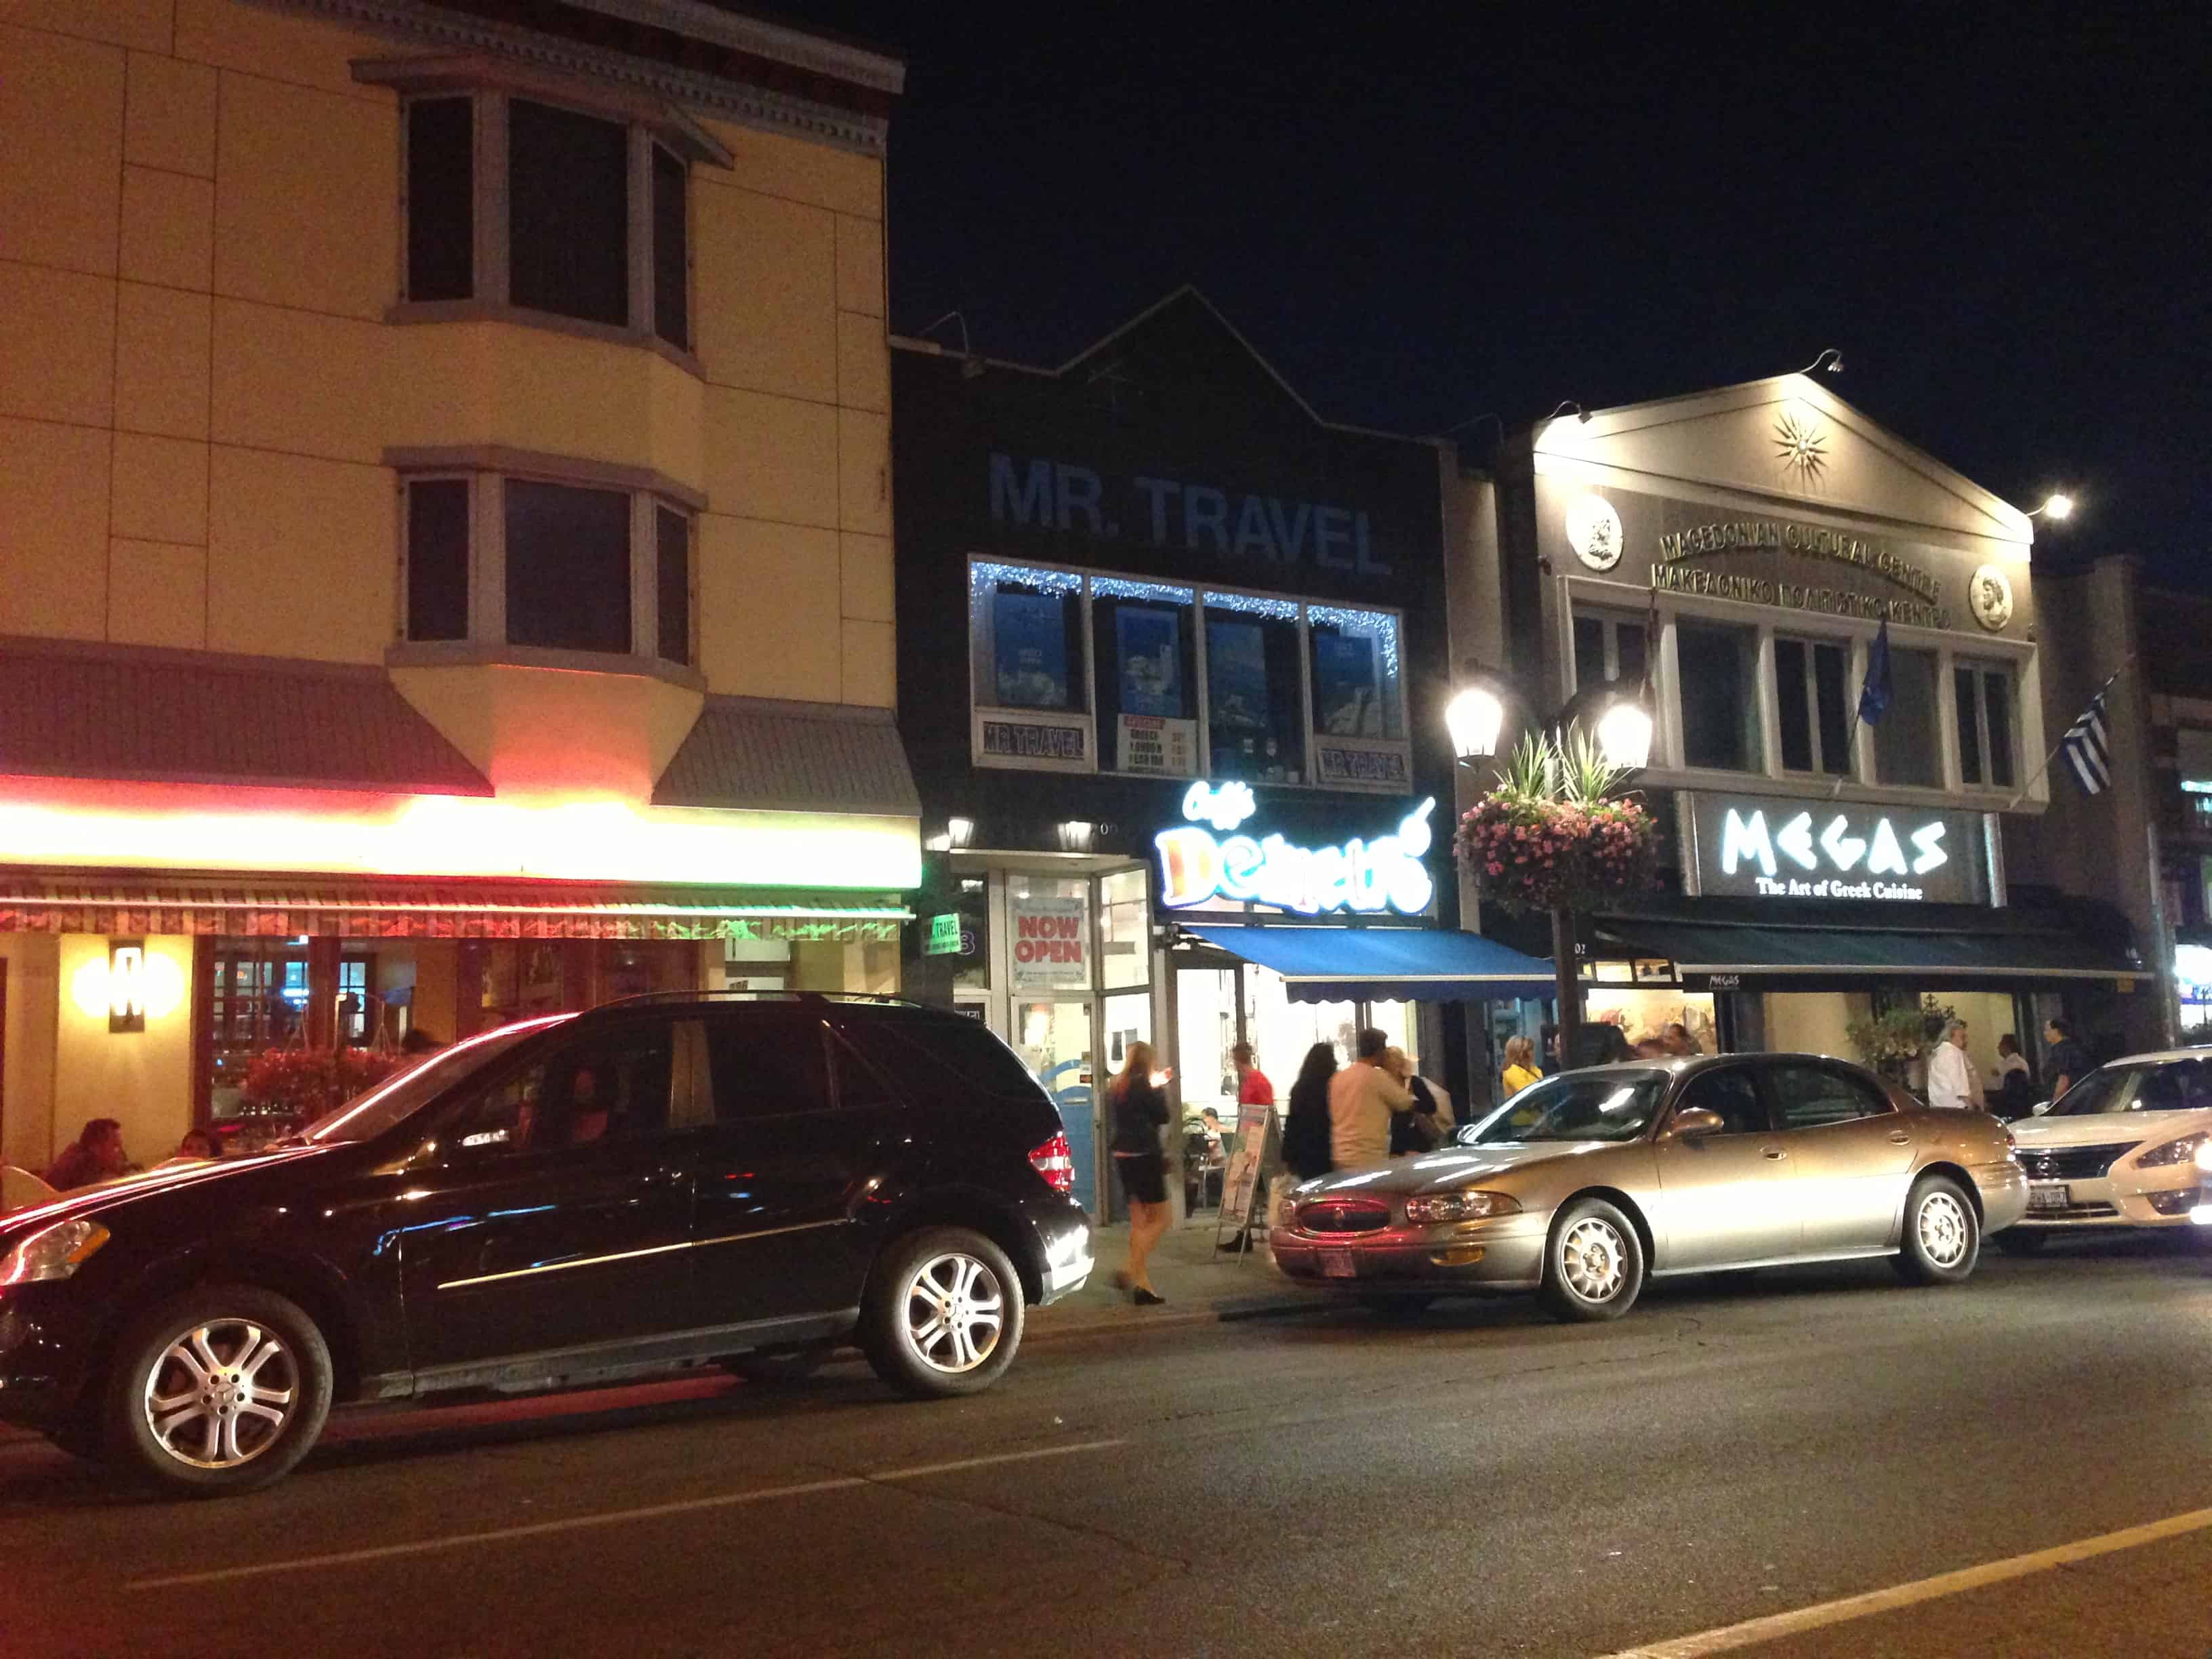 Megas Restaurant and Danforth Avenue in Greektown, Toronto, Ontario, Canada